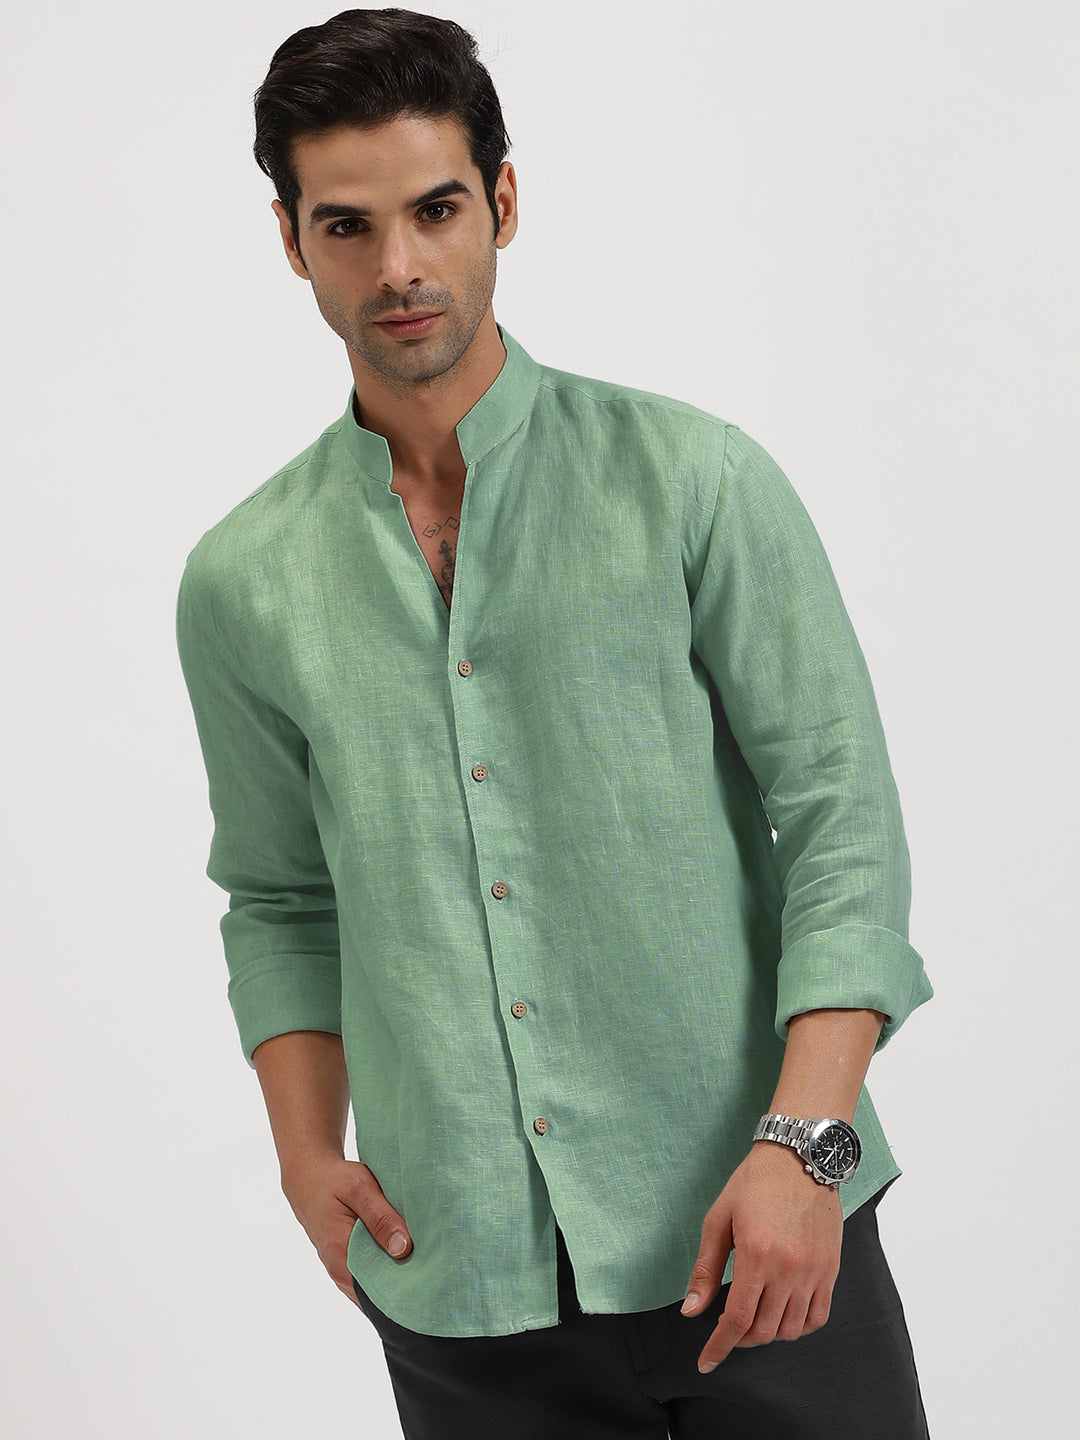 Craig - Pure Linen V Neck Full Sleeve Shirt - Smoke Green